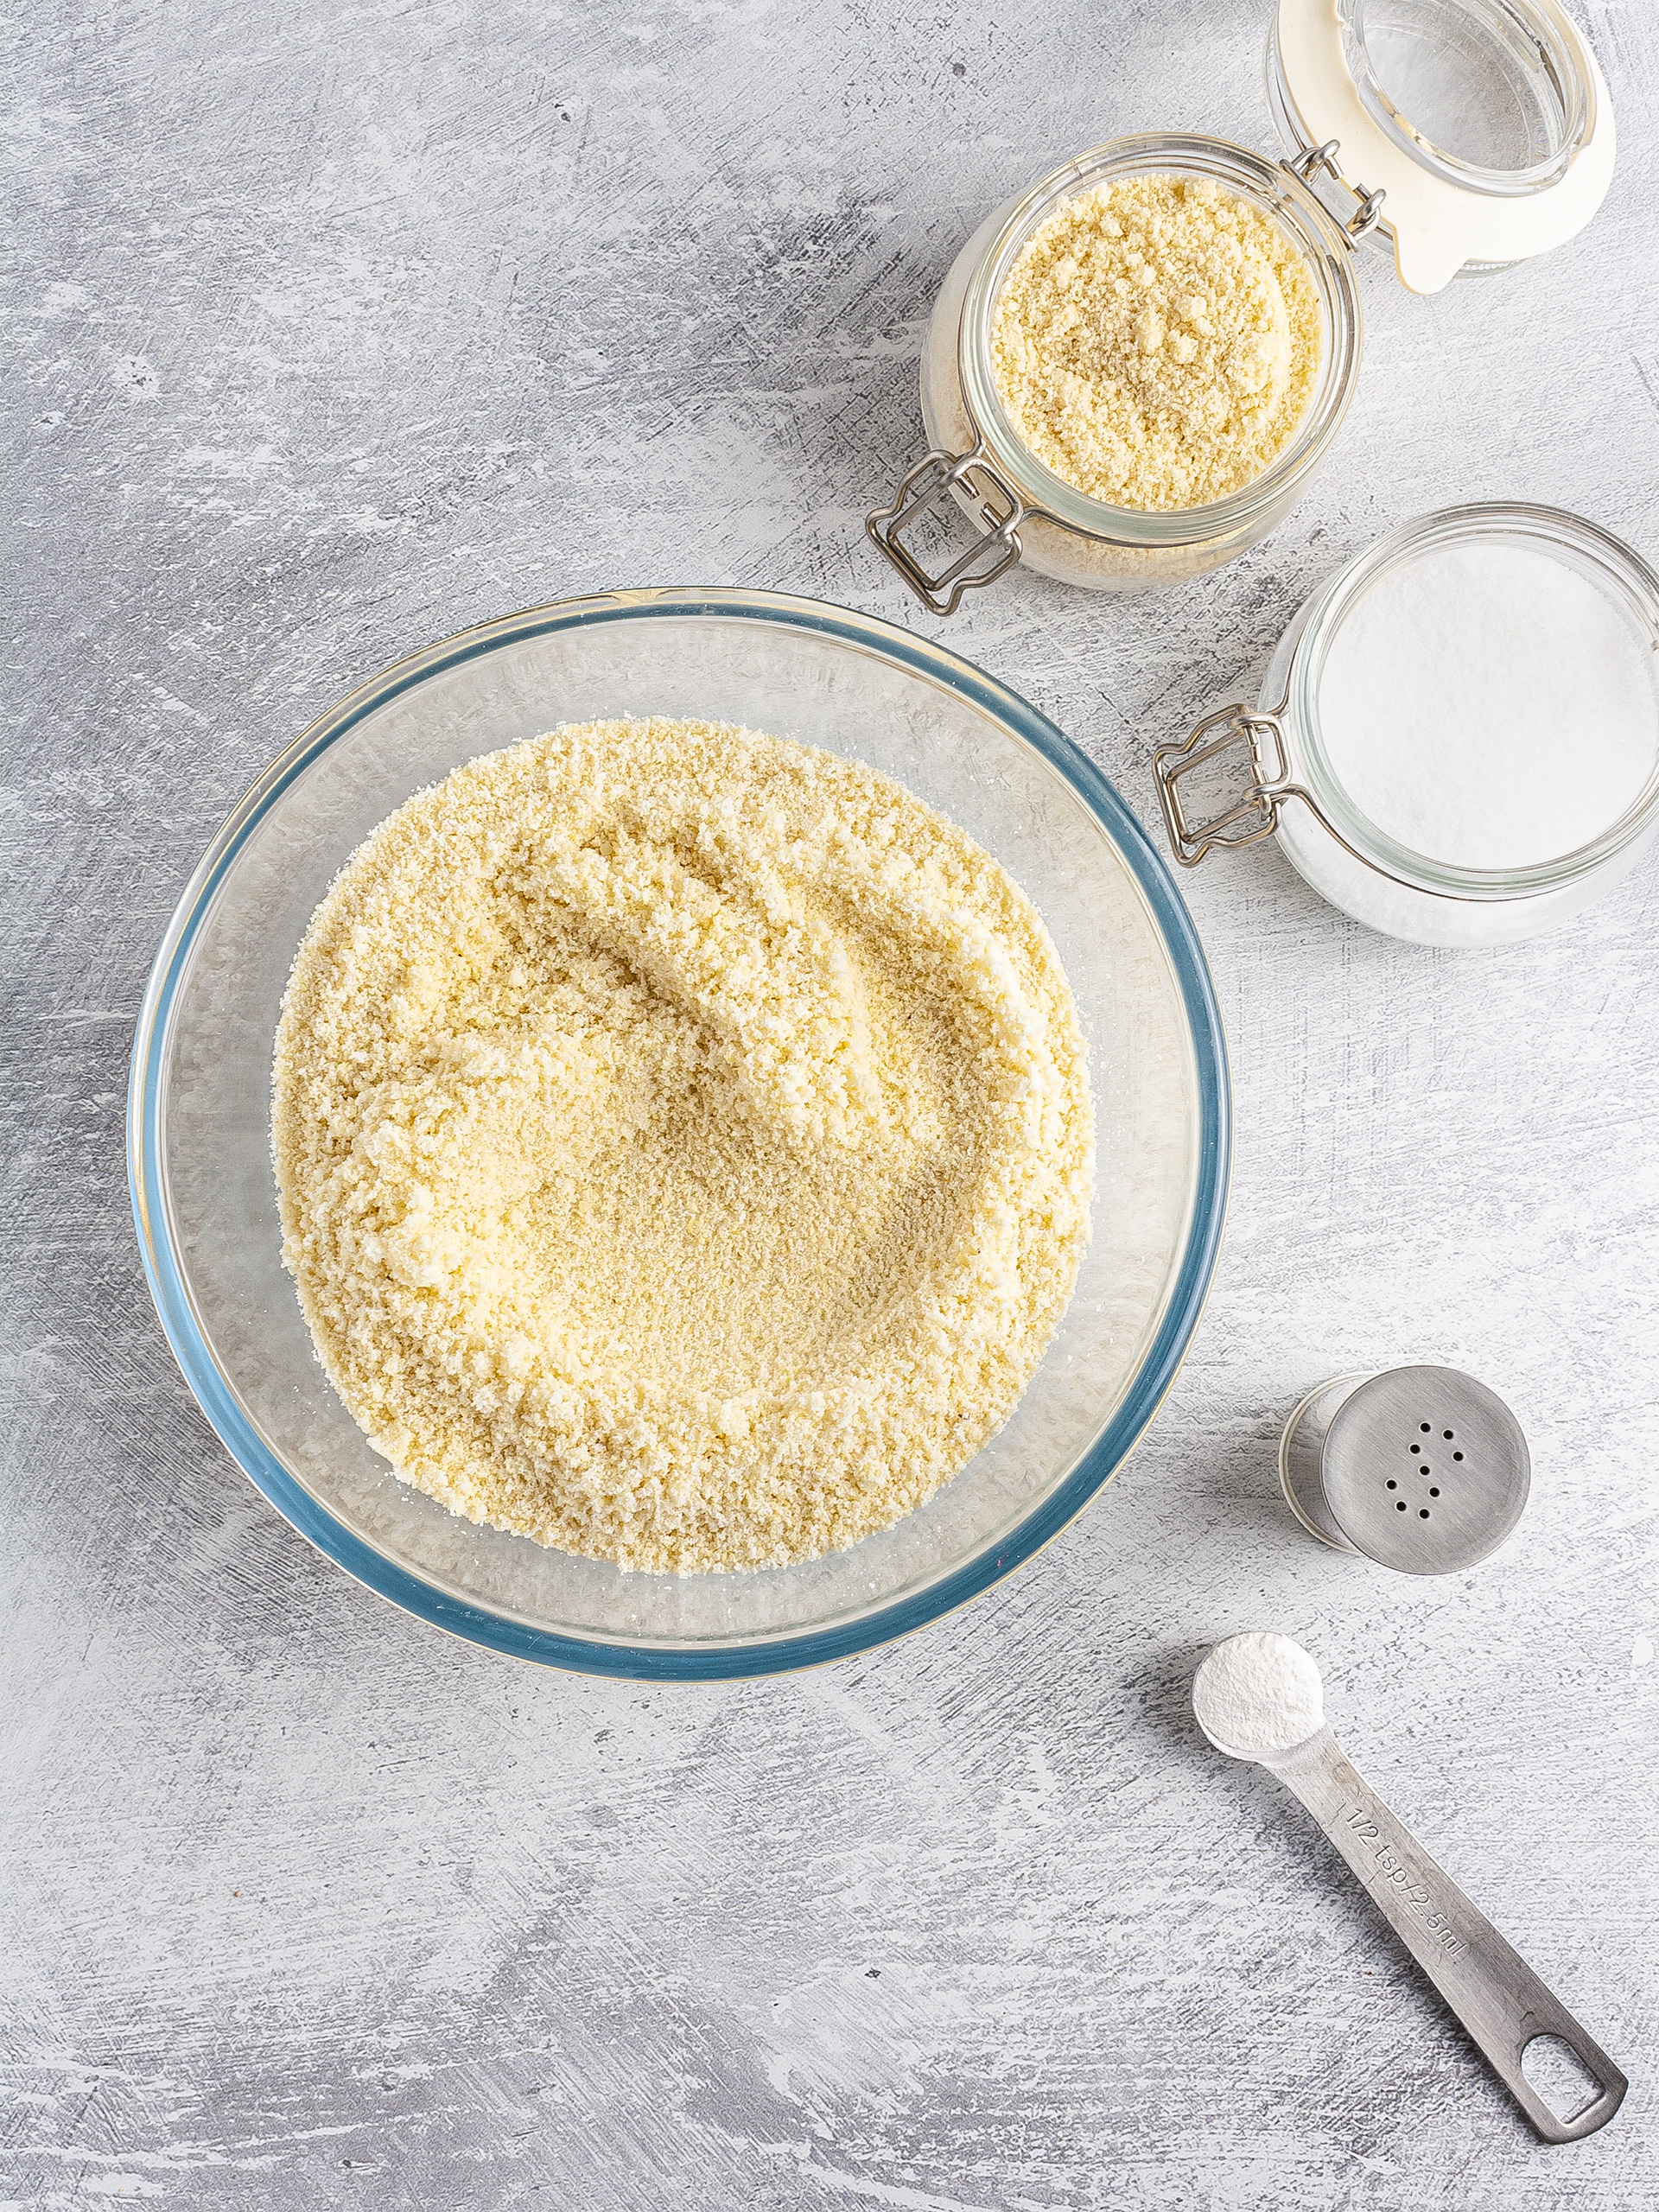 Almond flour mixed with erythritol, salt, and baking powder